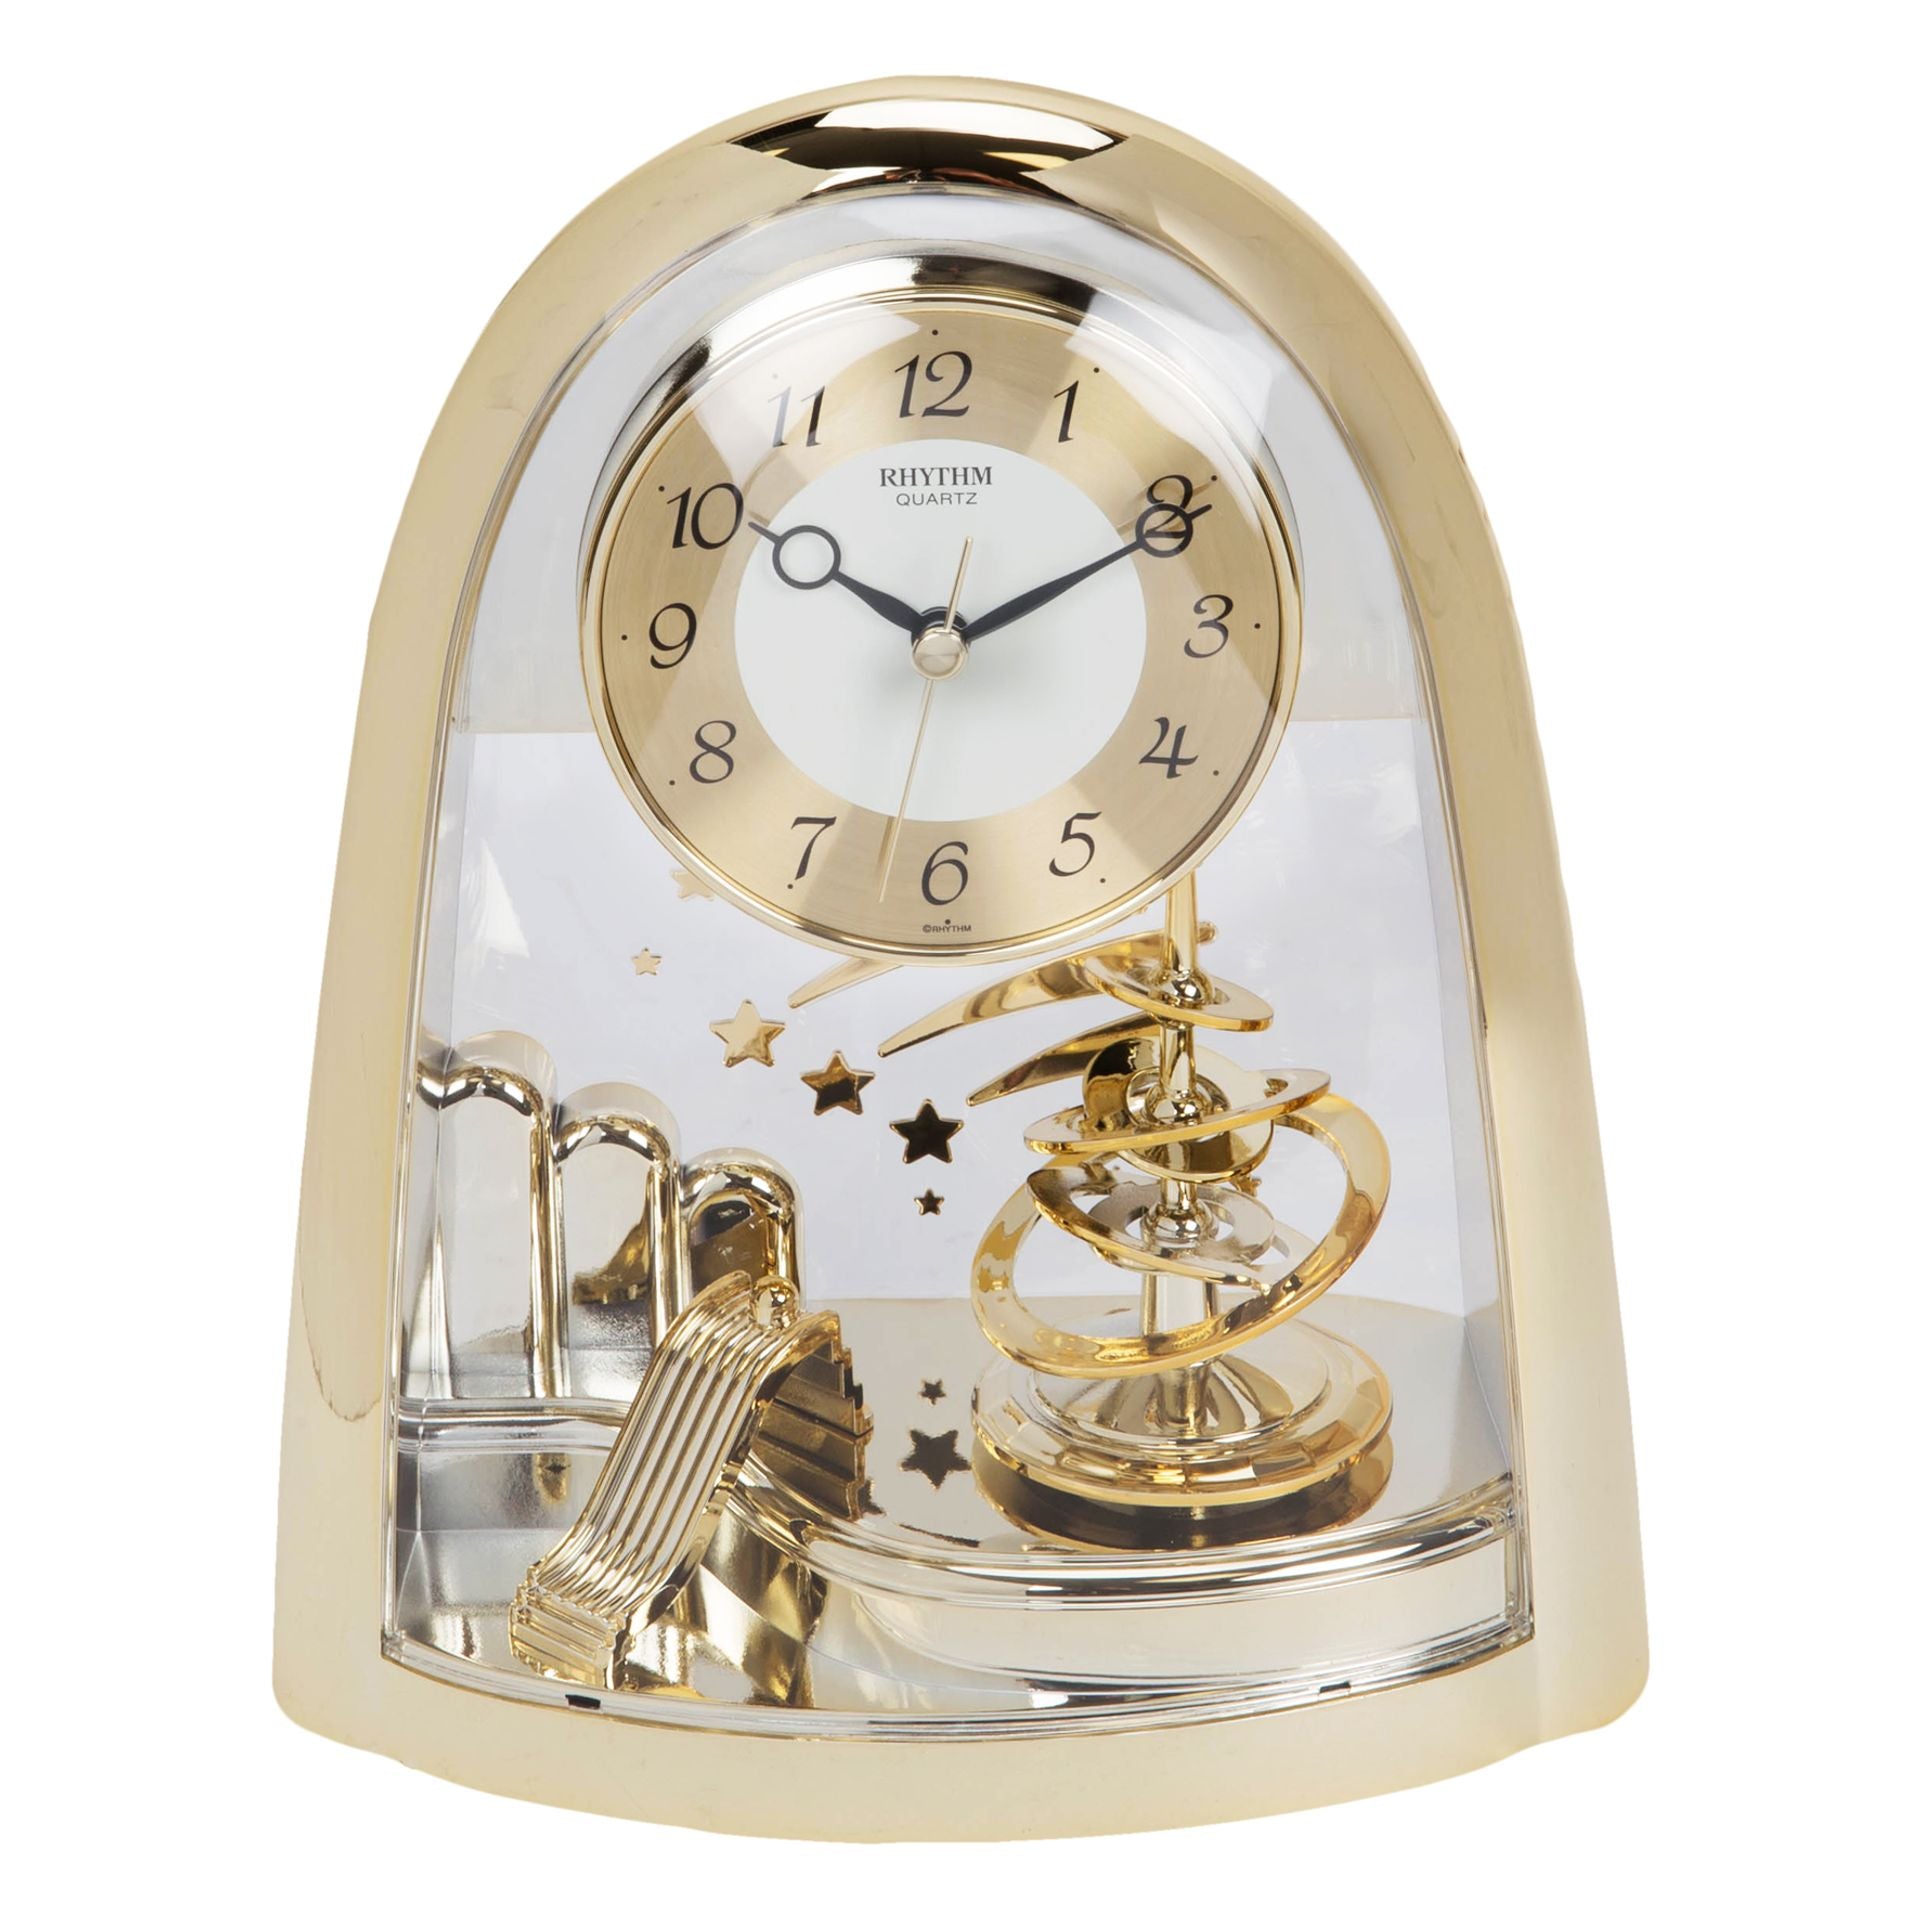 Rhythm Gold Rotating Pendulum Space Mantel Clock